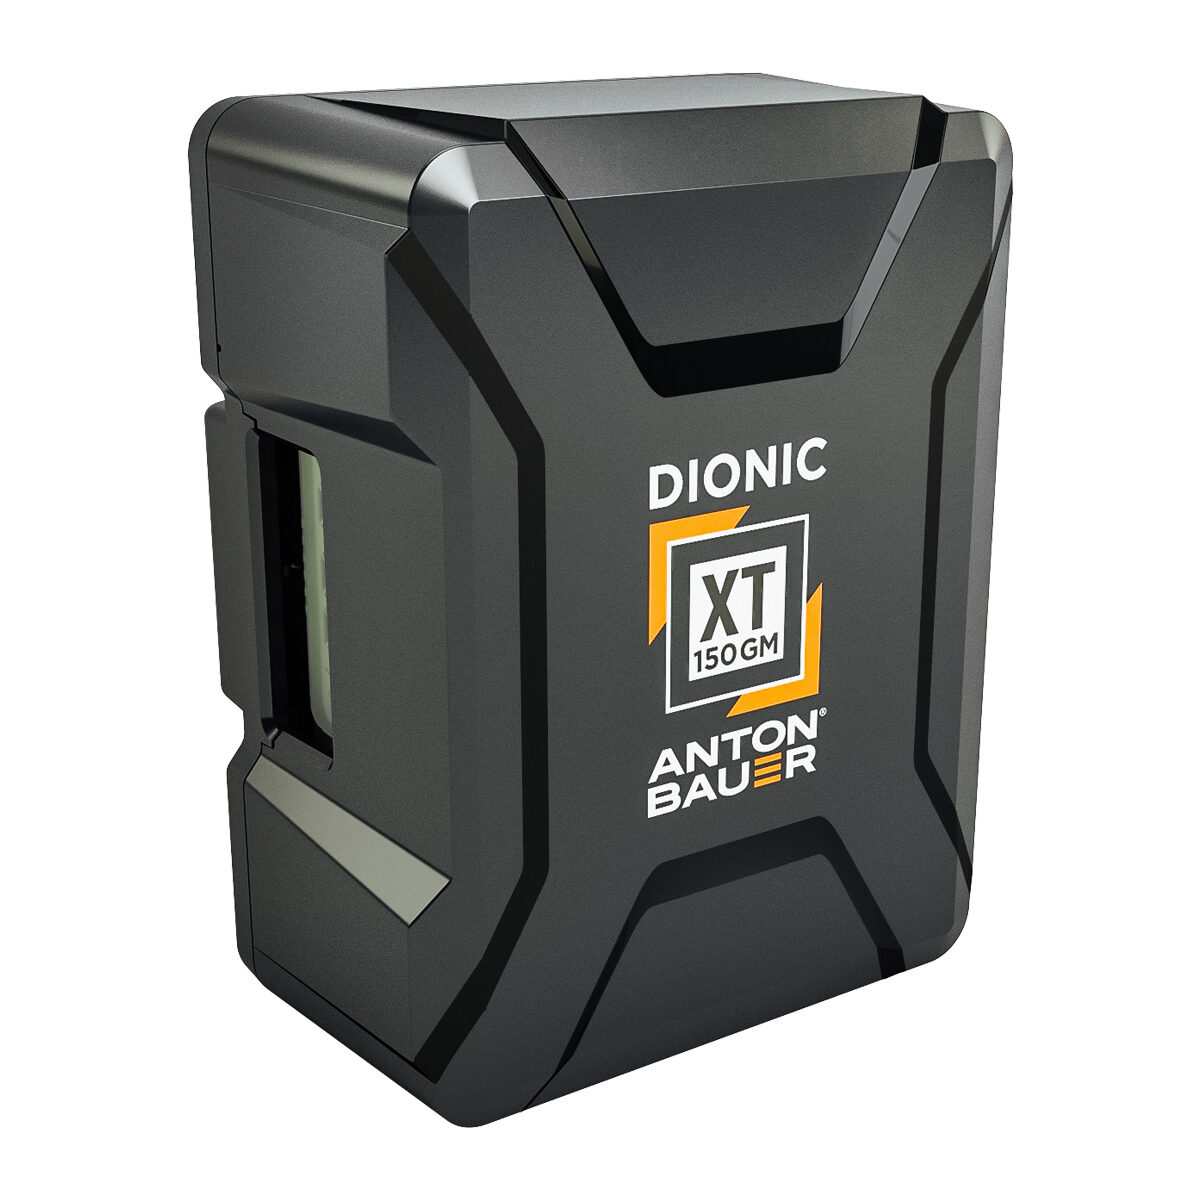 Dionic XT 150 Gold Mount